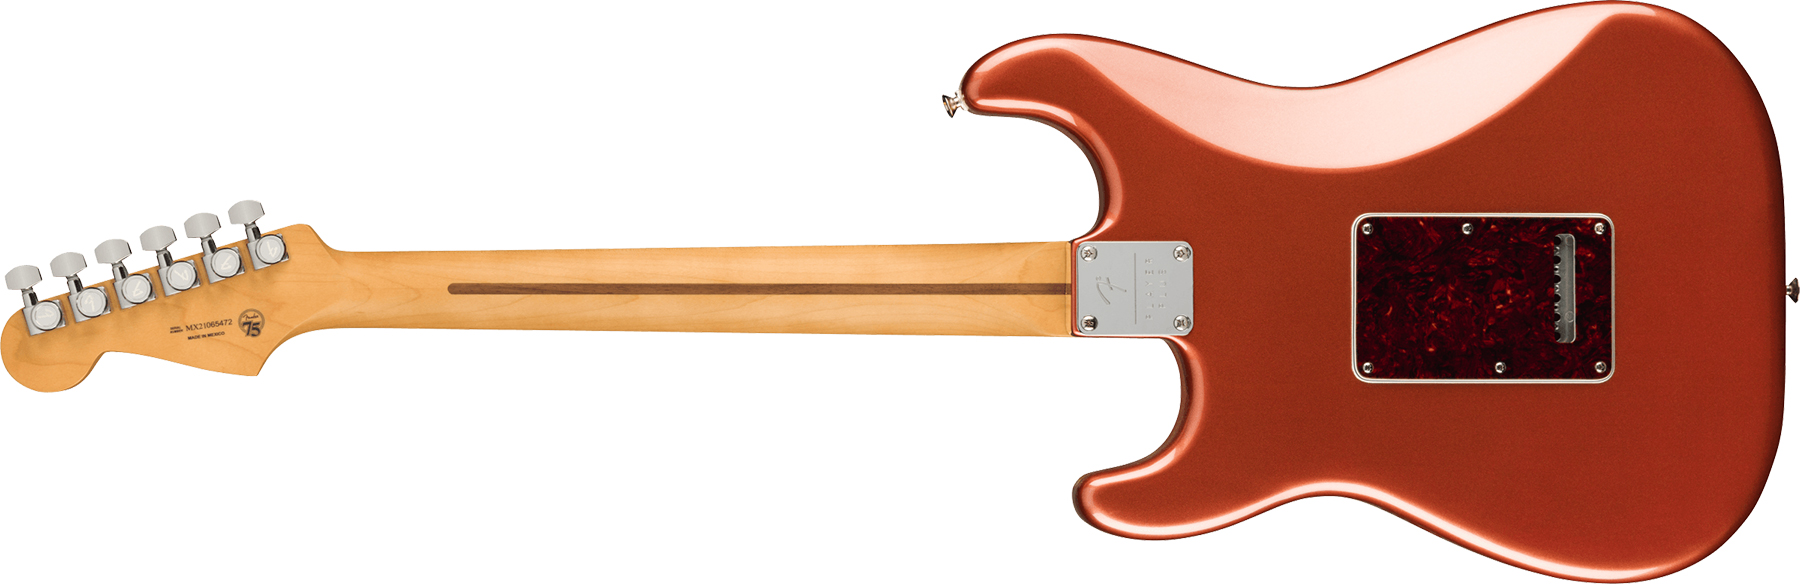 Fender Strat Player Plus Mex 3s Trem Pf - Aged Candy Apple Red - Guitare Électrique Forme Str - Variation 1